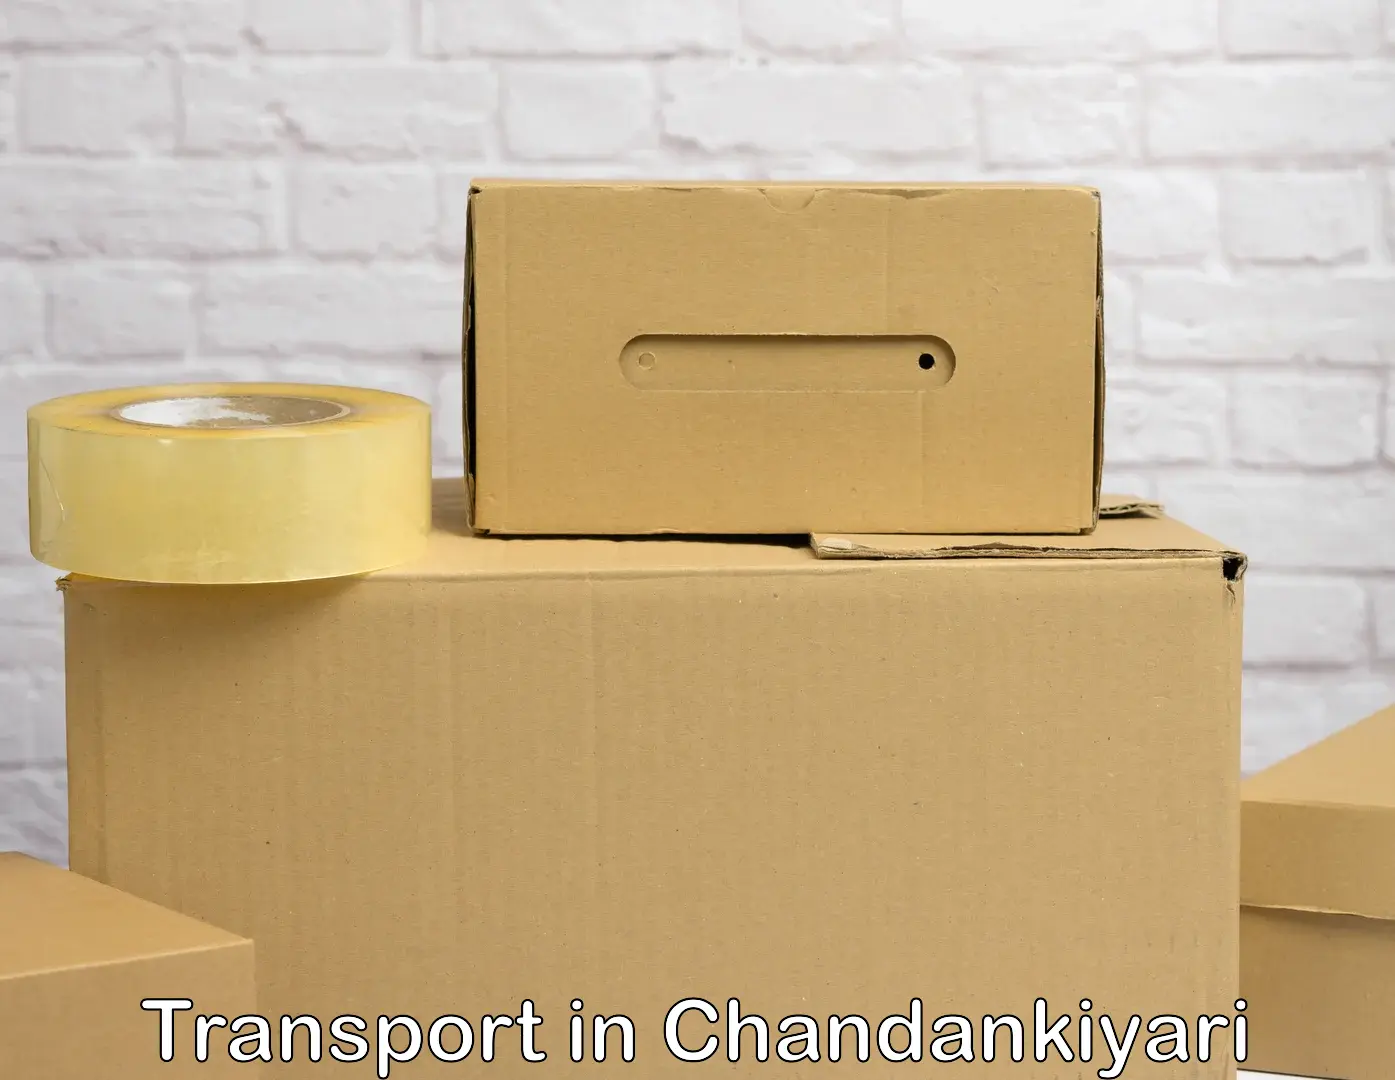 Intercity transport in Chandankiyari